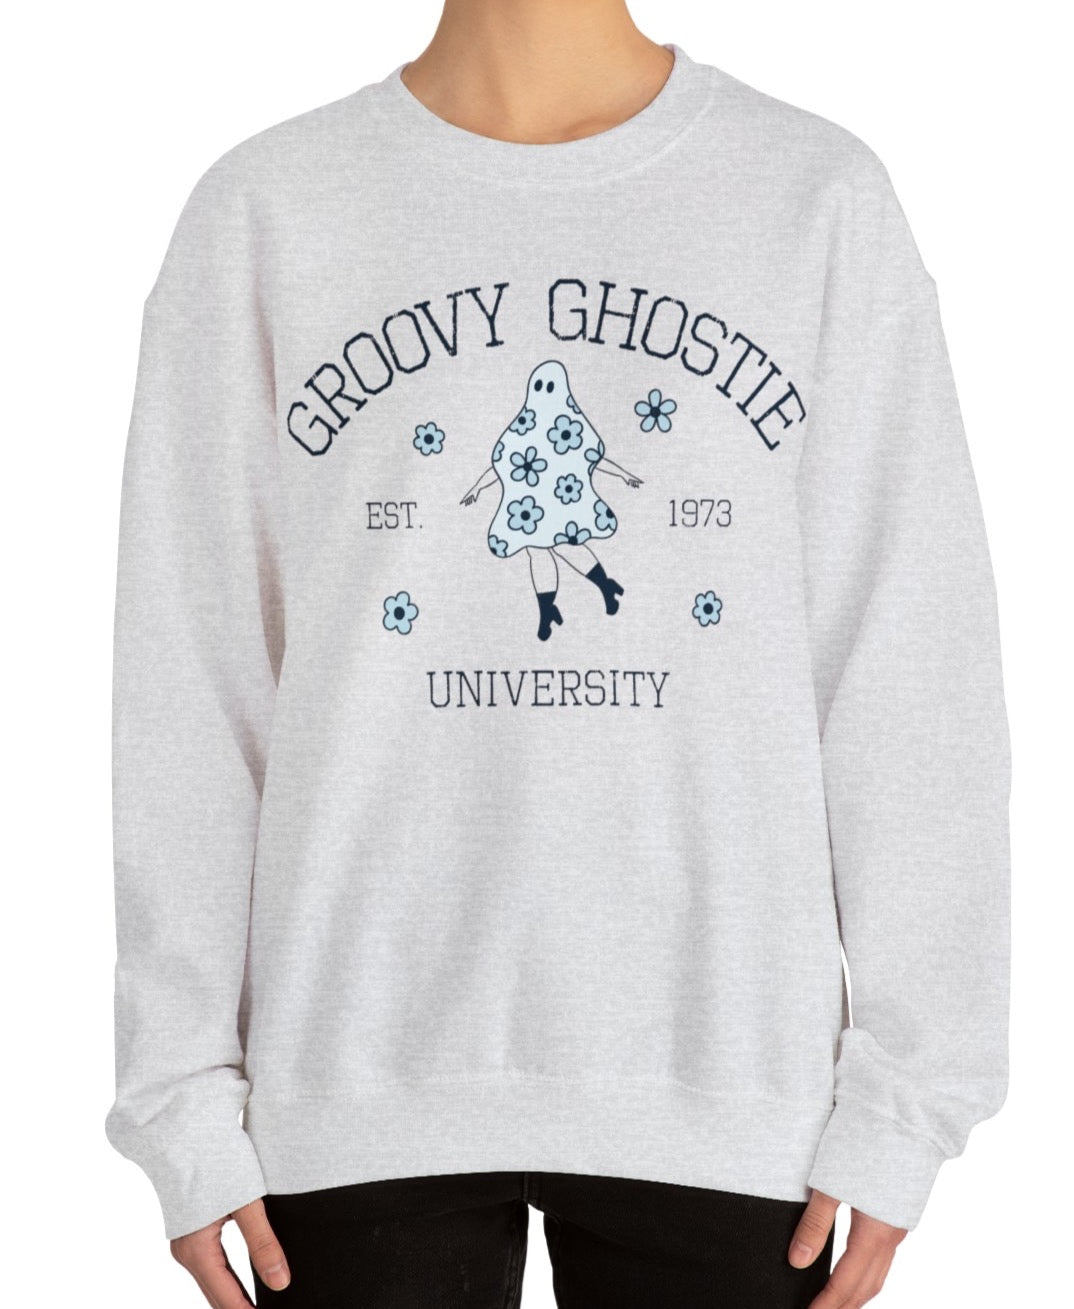 Groovy Ghostie University Crewneck Indigo Blue or Ash Grey